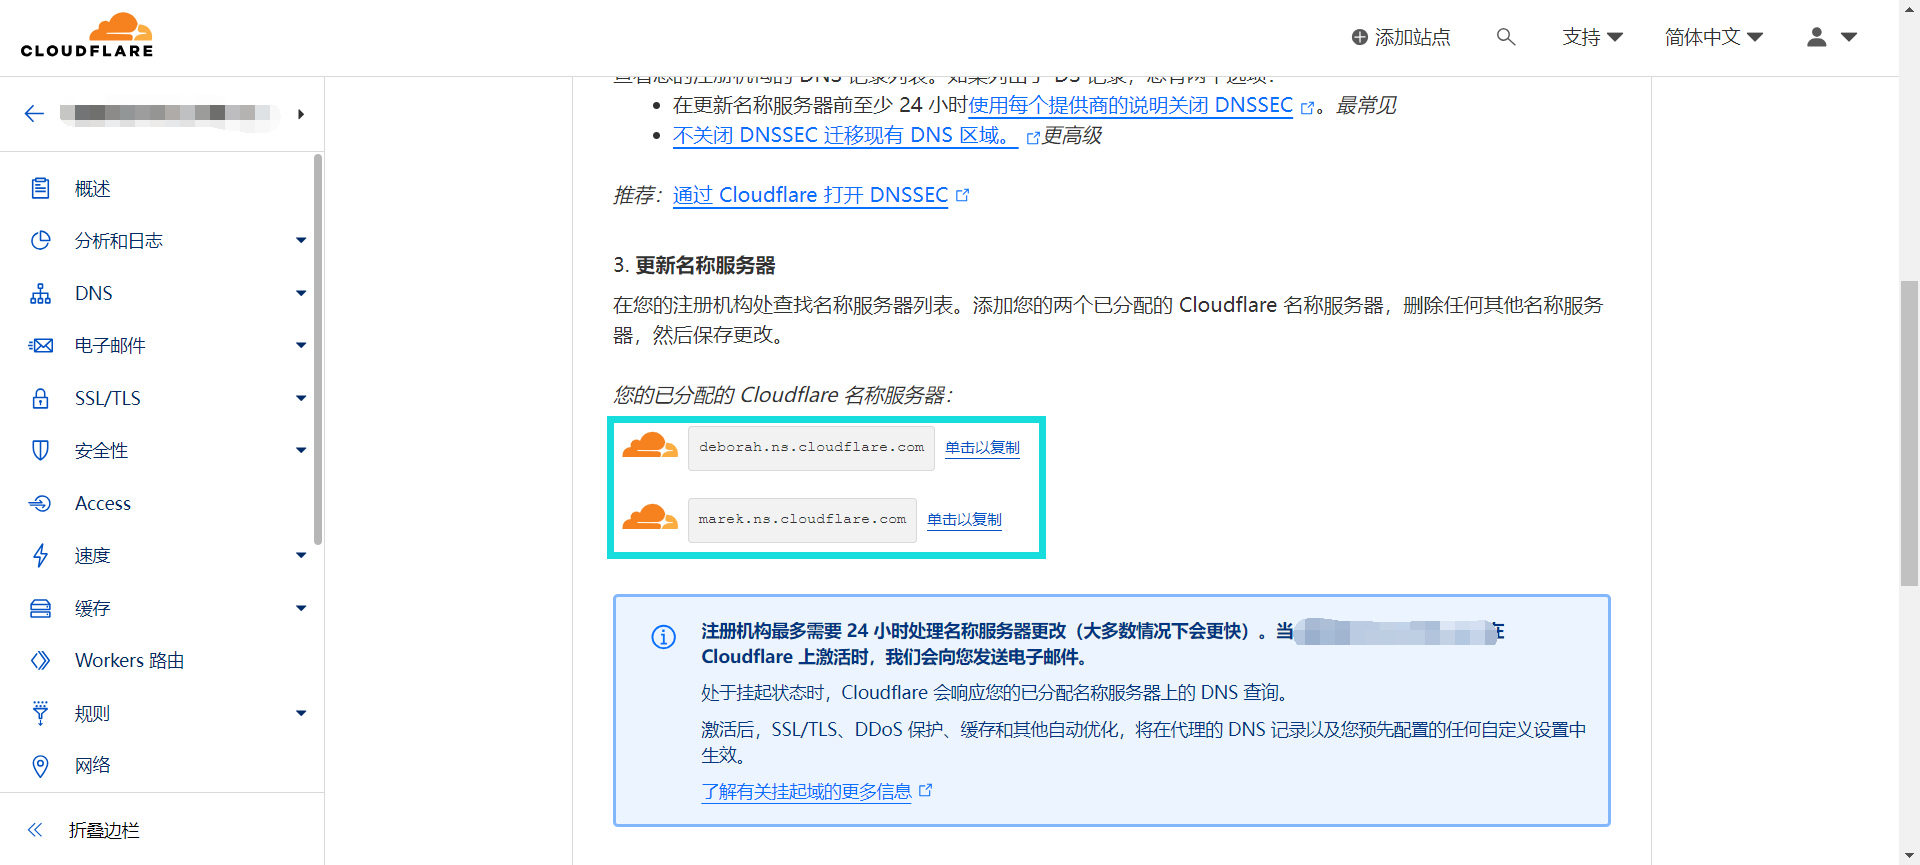 Cloudflare分配的Nameserver